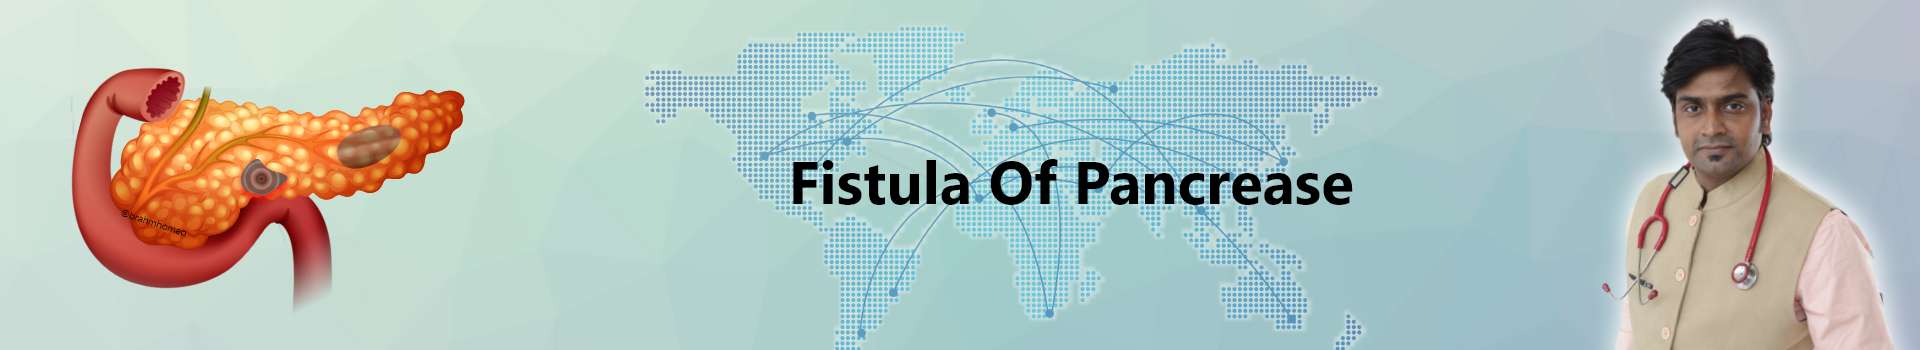 Fistula Of Pancreatitis